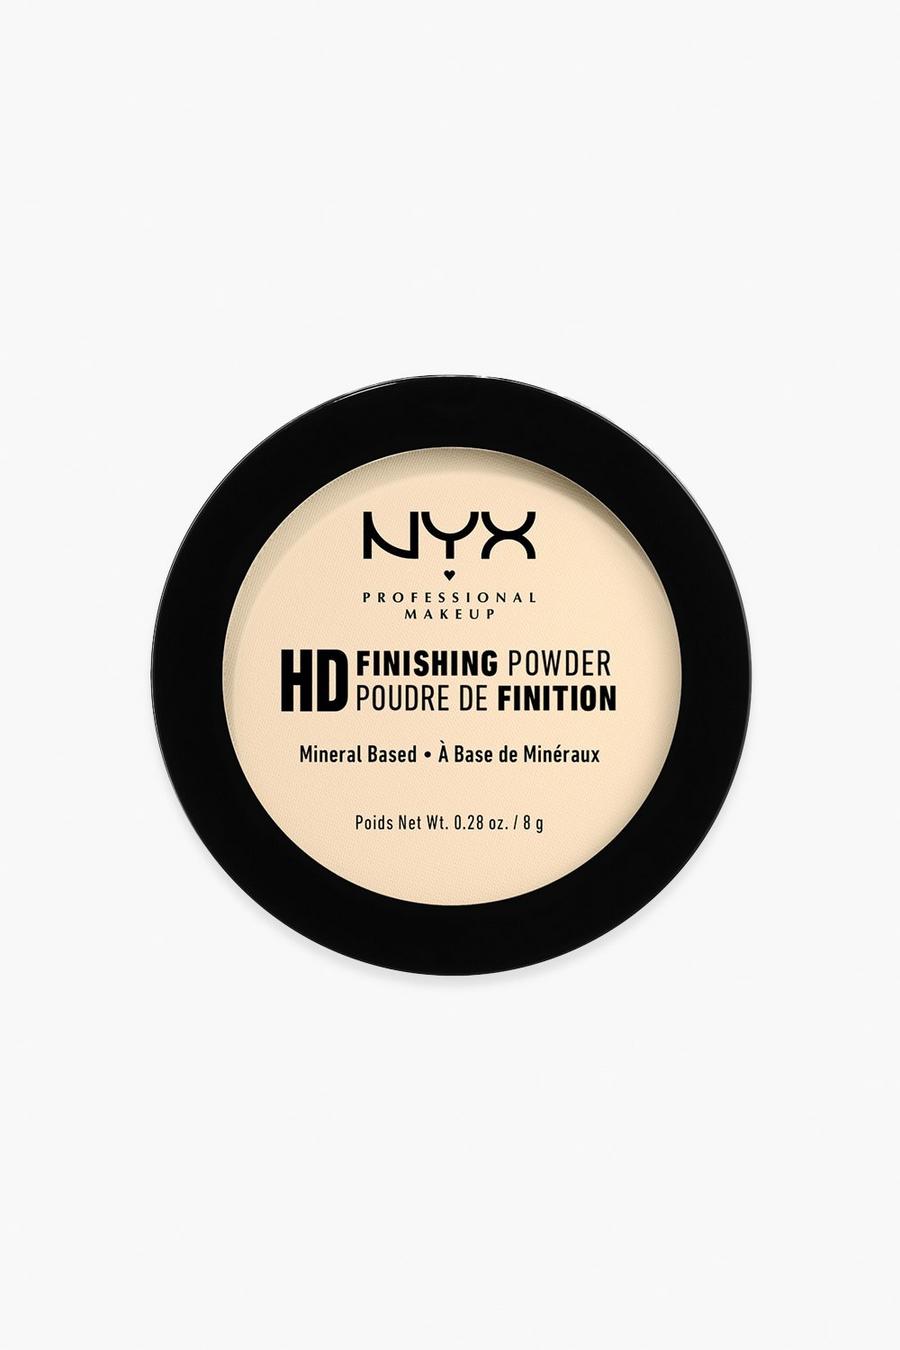 Polvos High Definition Finishing Powder de NYX Professional Makeup, 02 banana image number 1